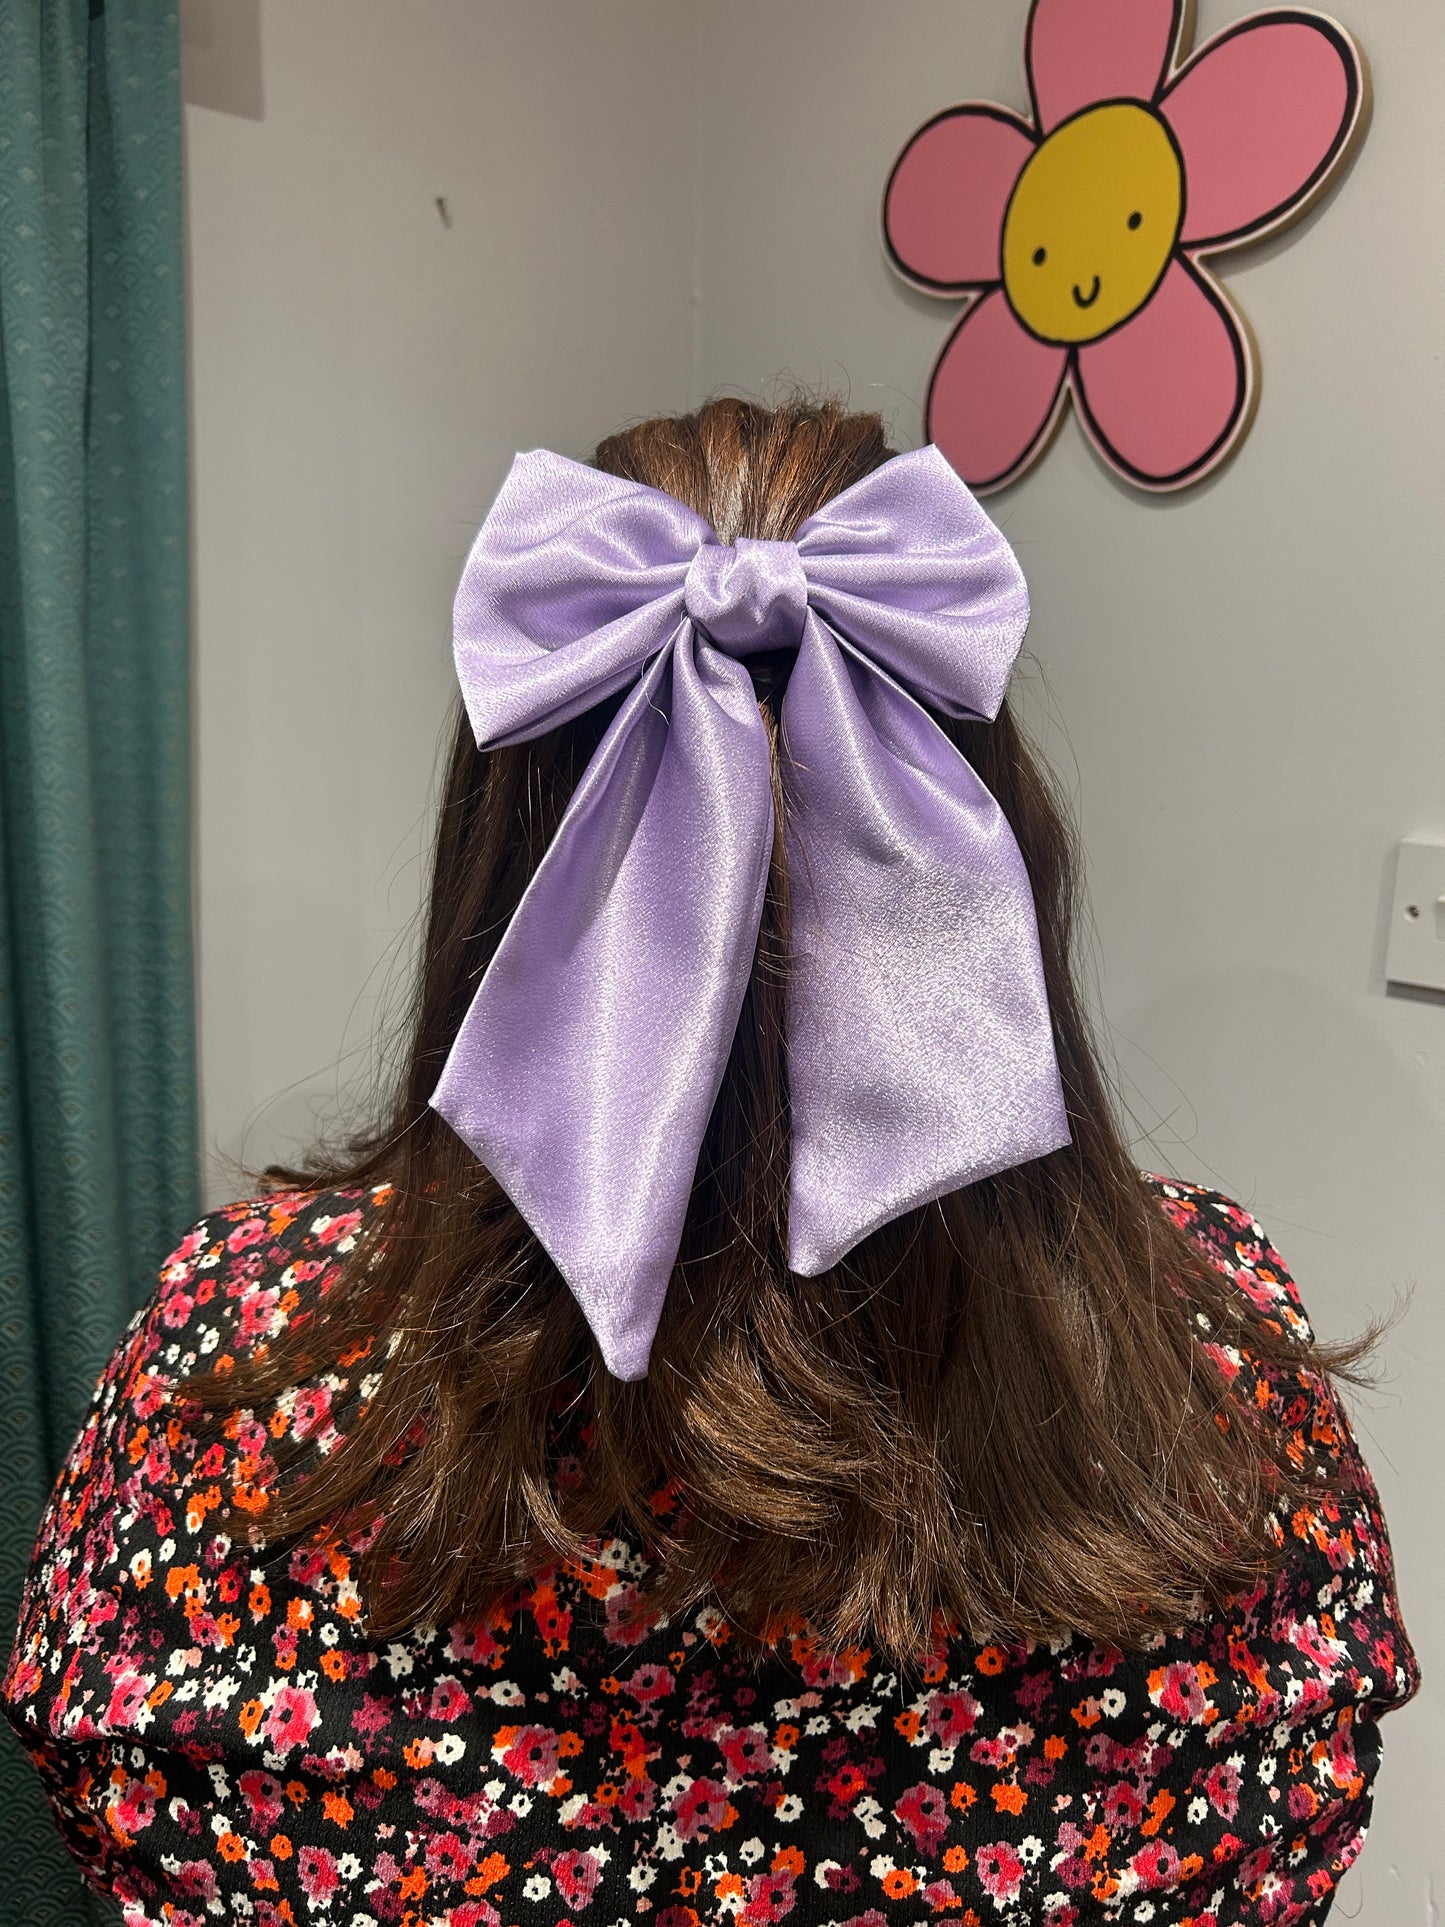 Large Luxury Lilac Satin Hair Bow